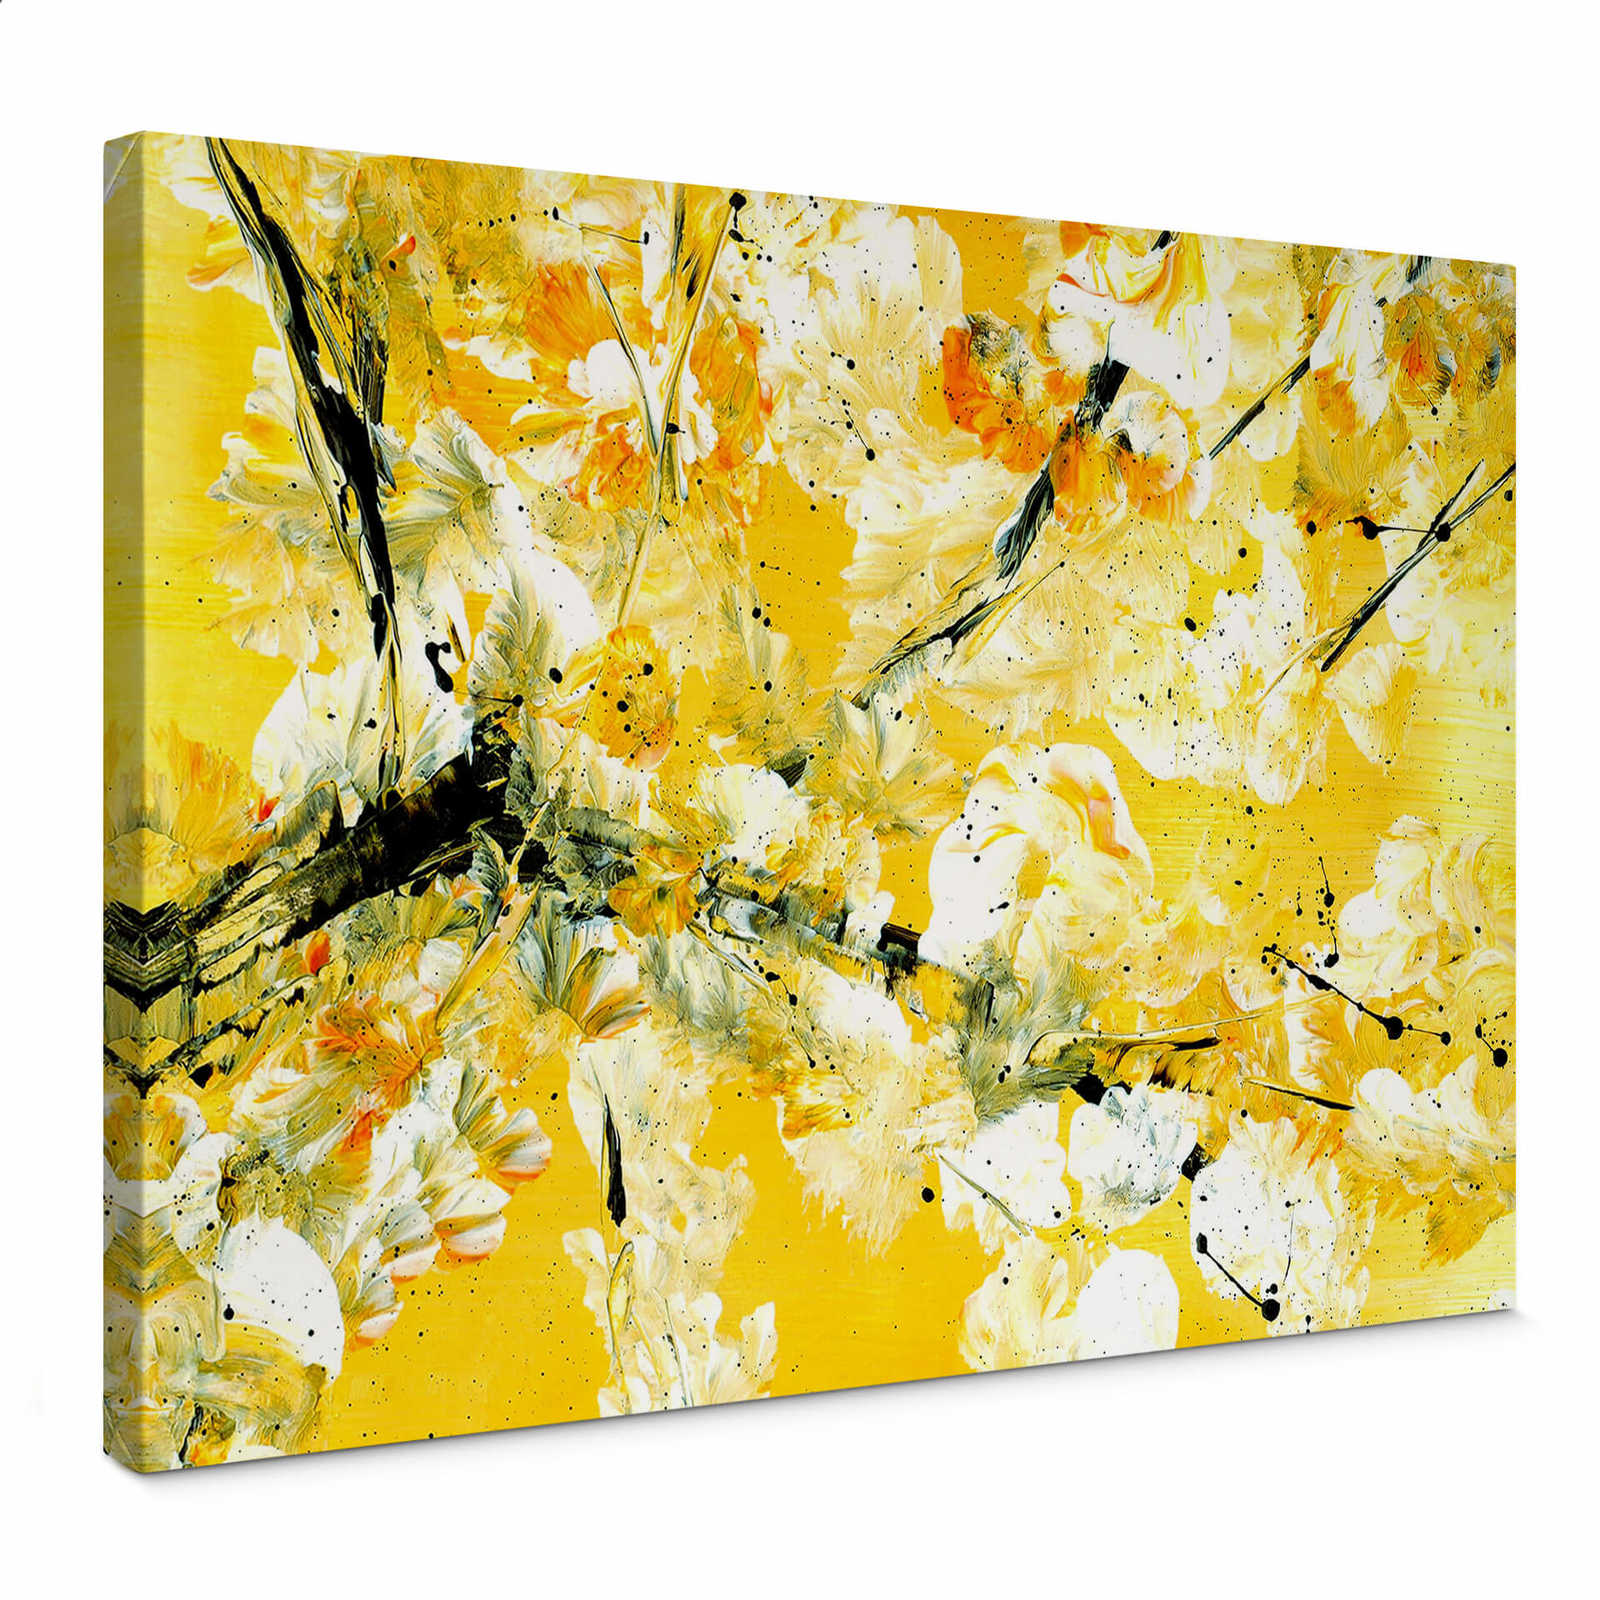 Niksic abstract canvas print – yellow
